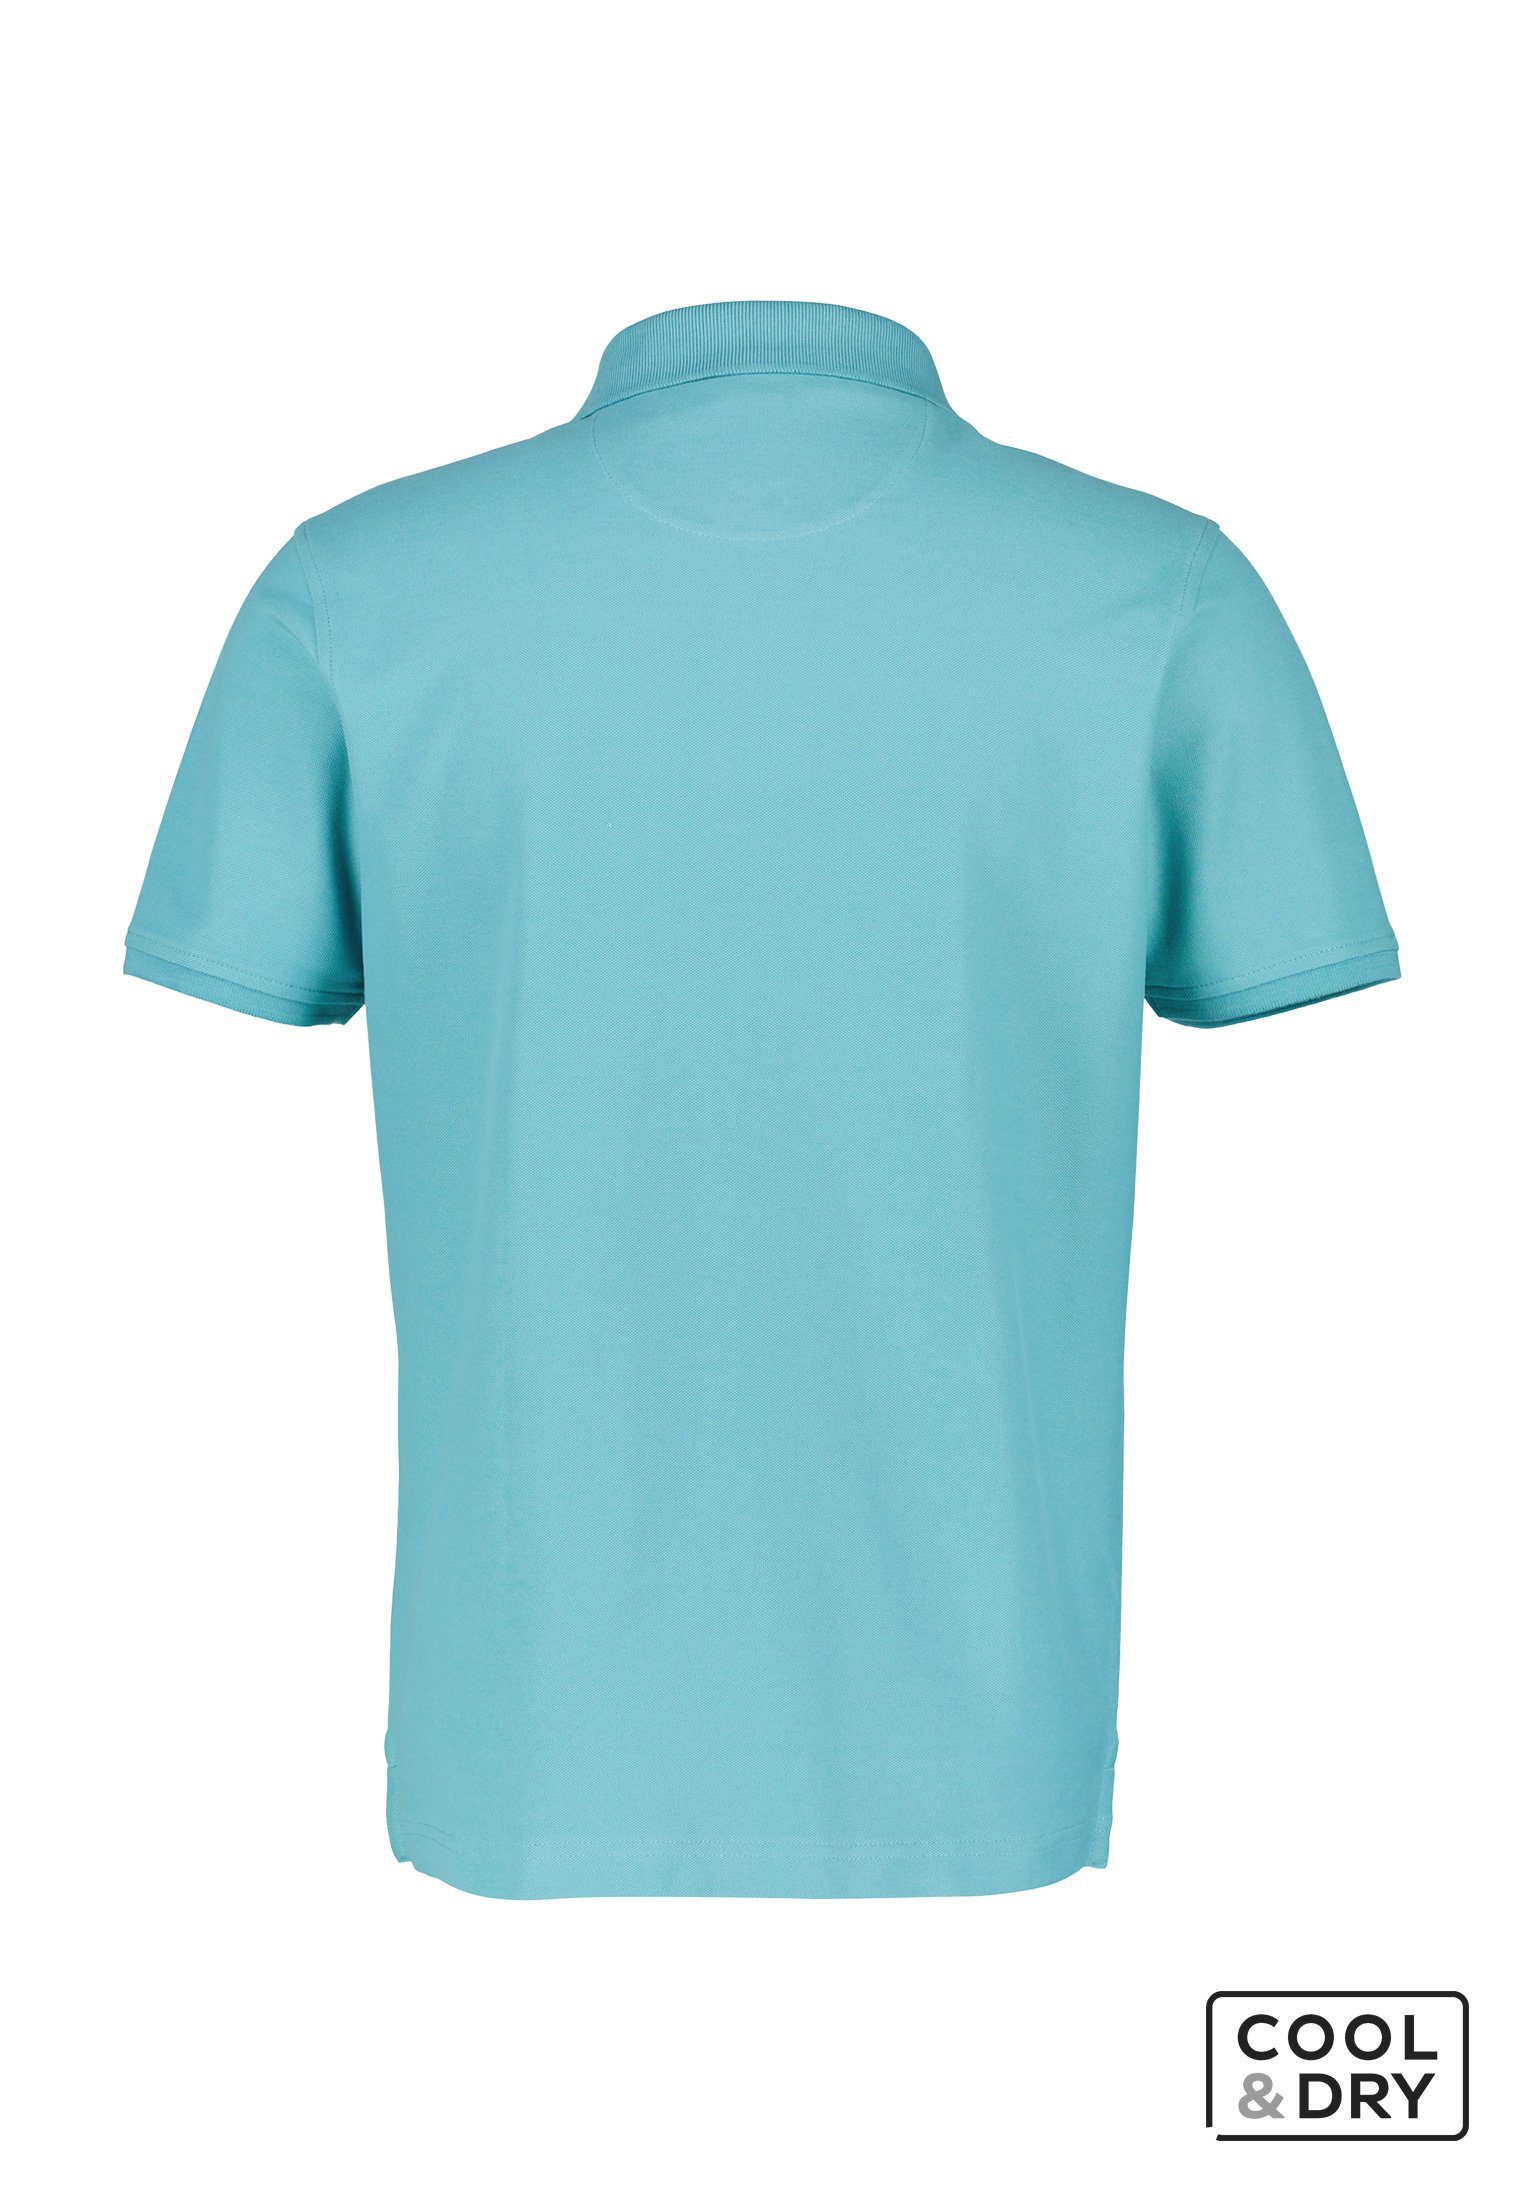 BLUE *Cool Polostyle LERROS Klassischer Dry* in LERROS Piquéqualität Poloshirt & SKY